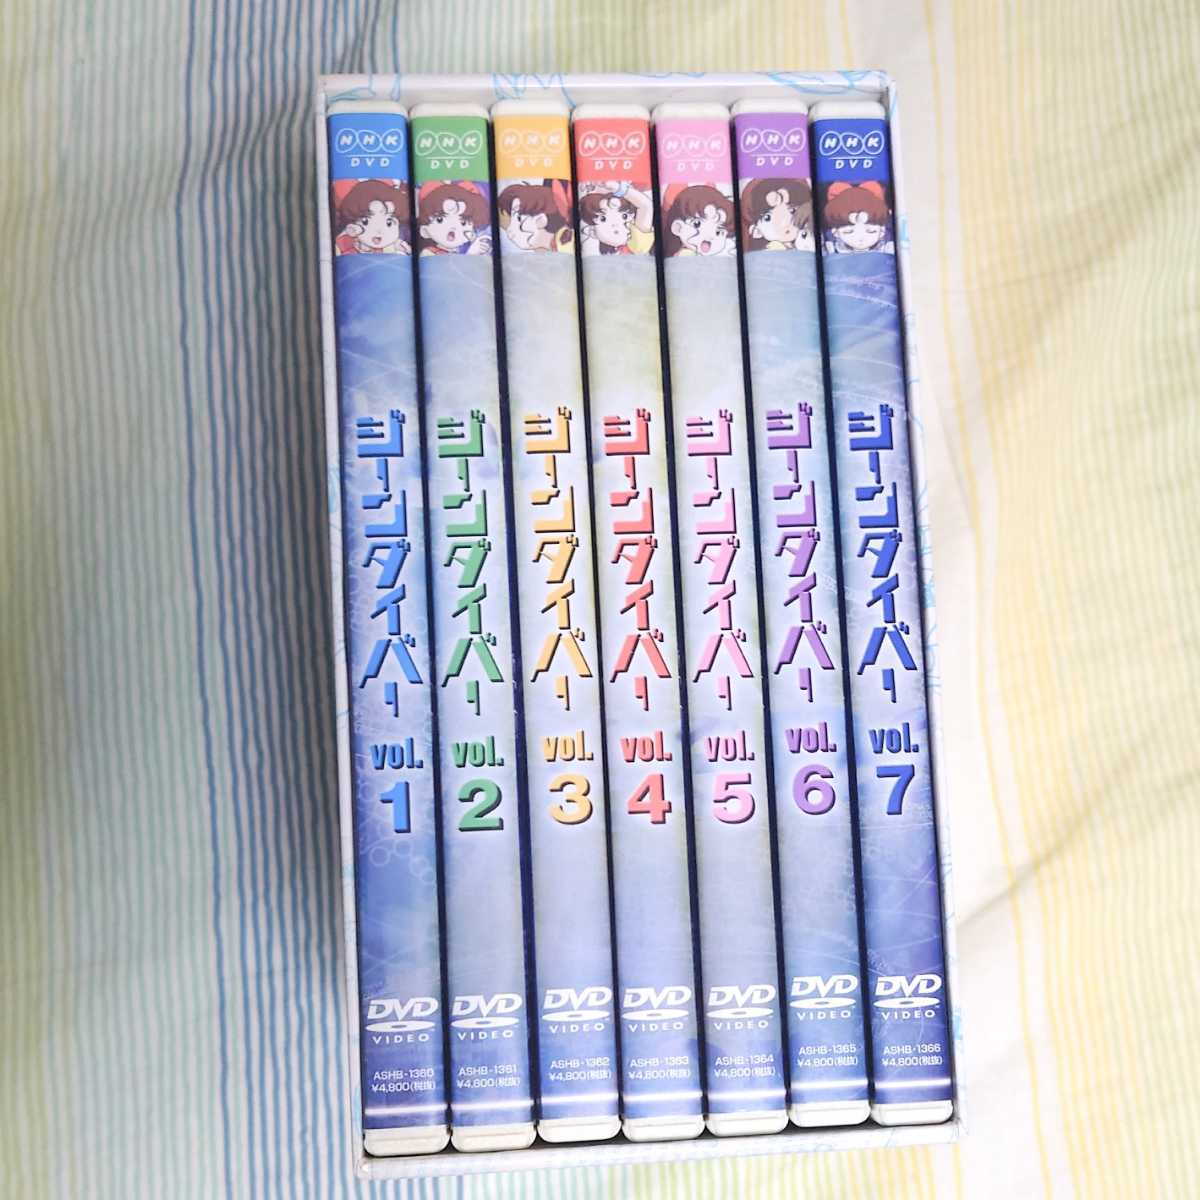  Gene дайвер DVD-BOX